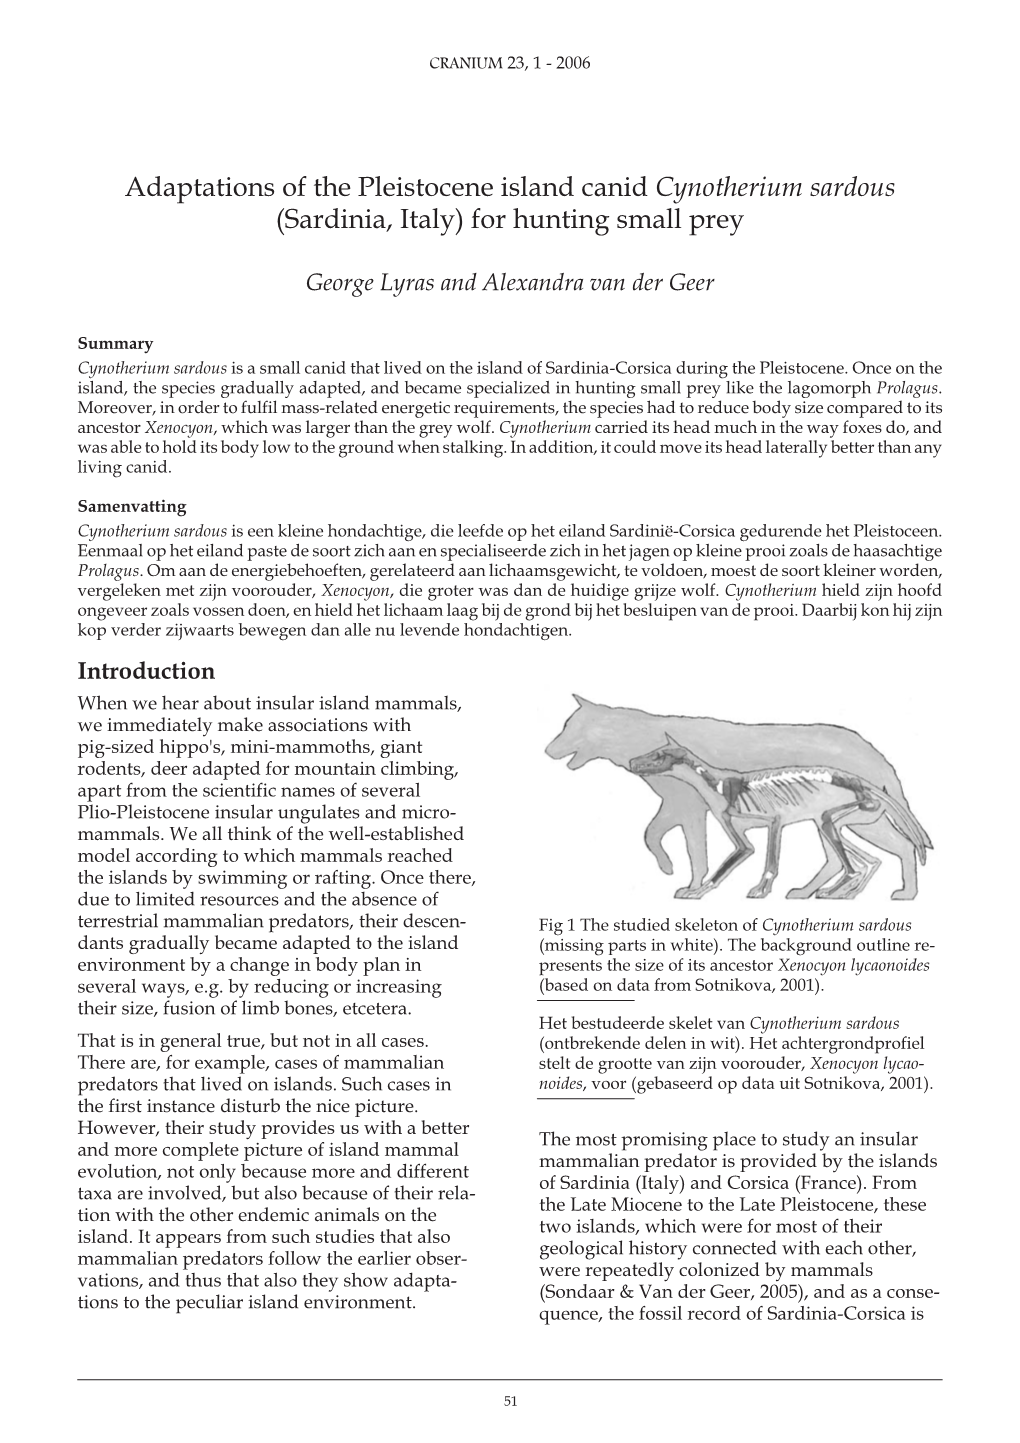 Adaptations of the Pleistocene Island Canid Cynot He Rium Sardous (Sardinia, Italy) for Hunting Small Prey